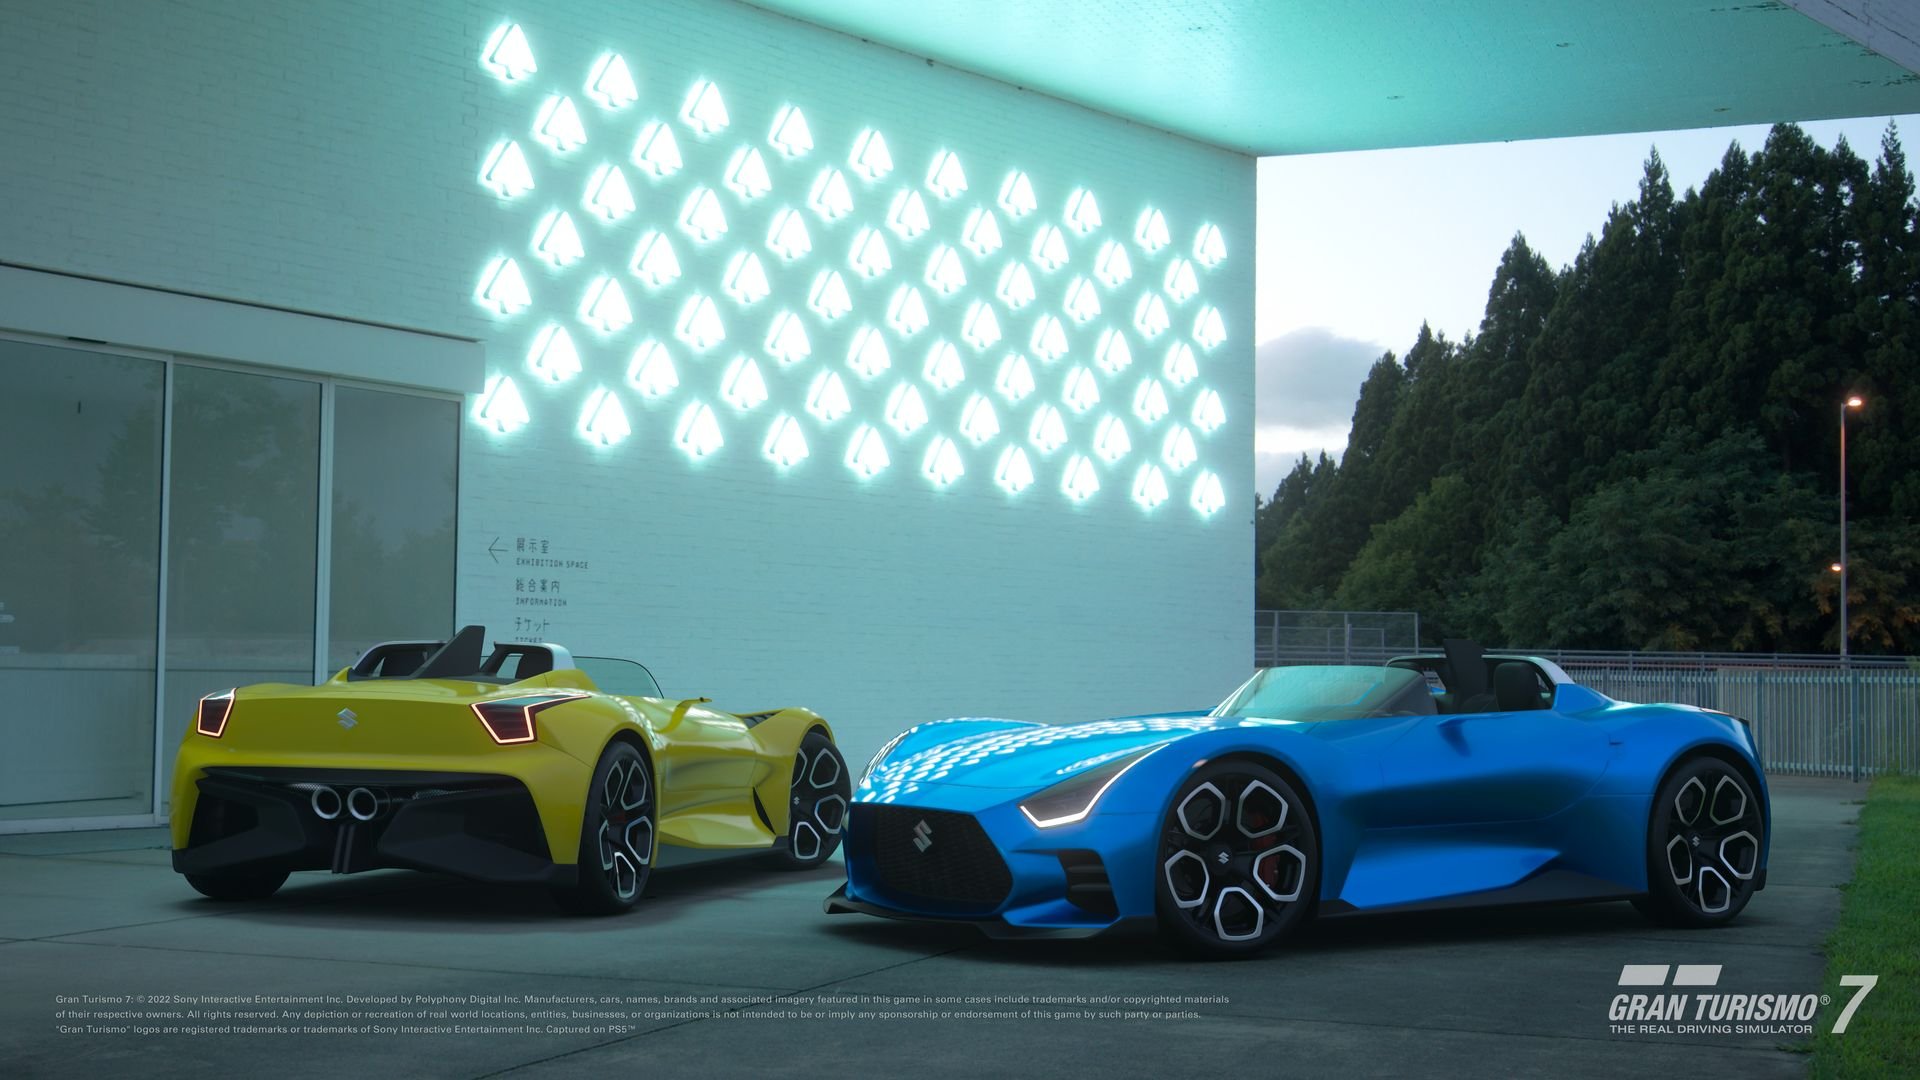 Forza Horizon 5 And Gran Turismo 7 Get New Cars, Photo Mode Updates